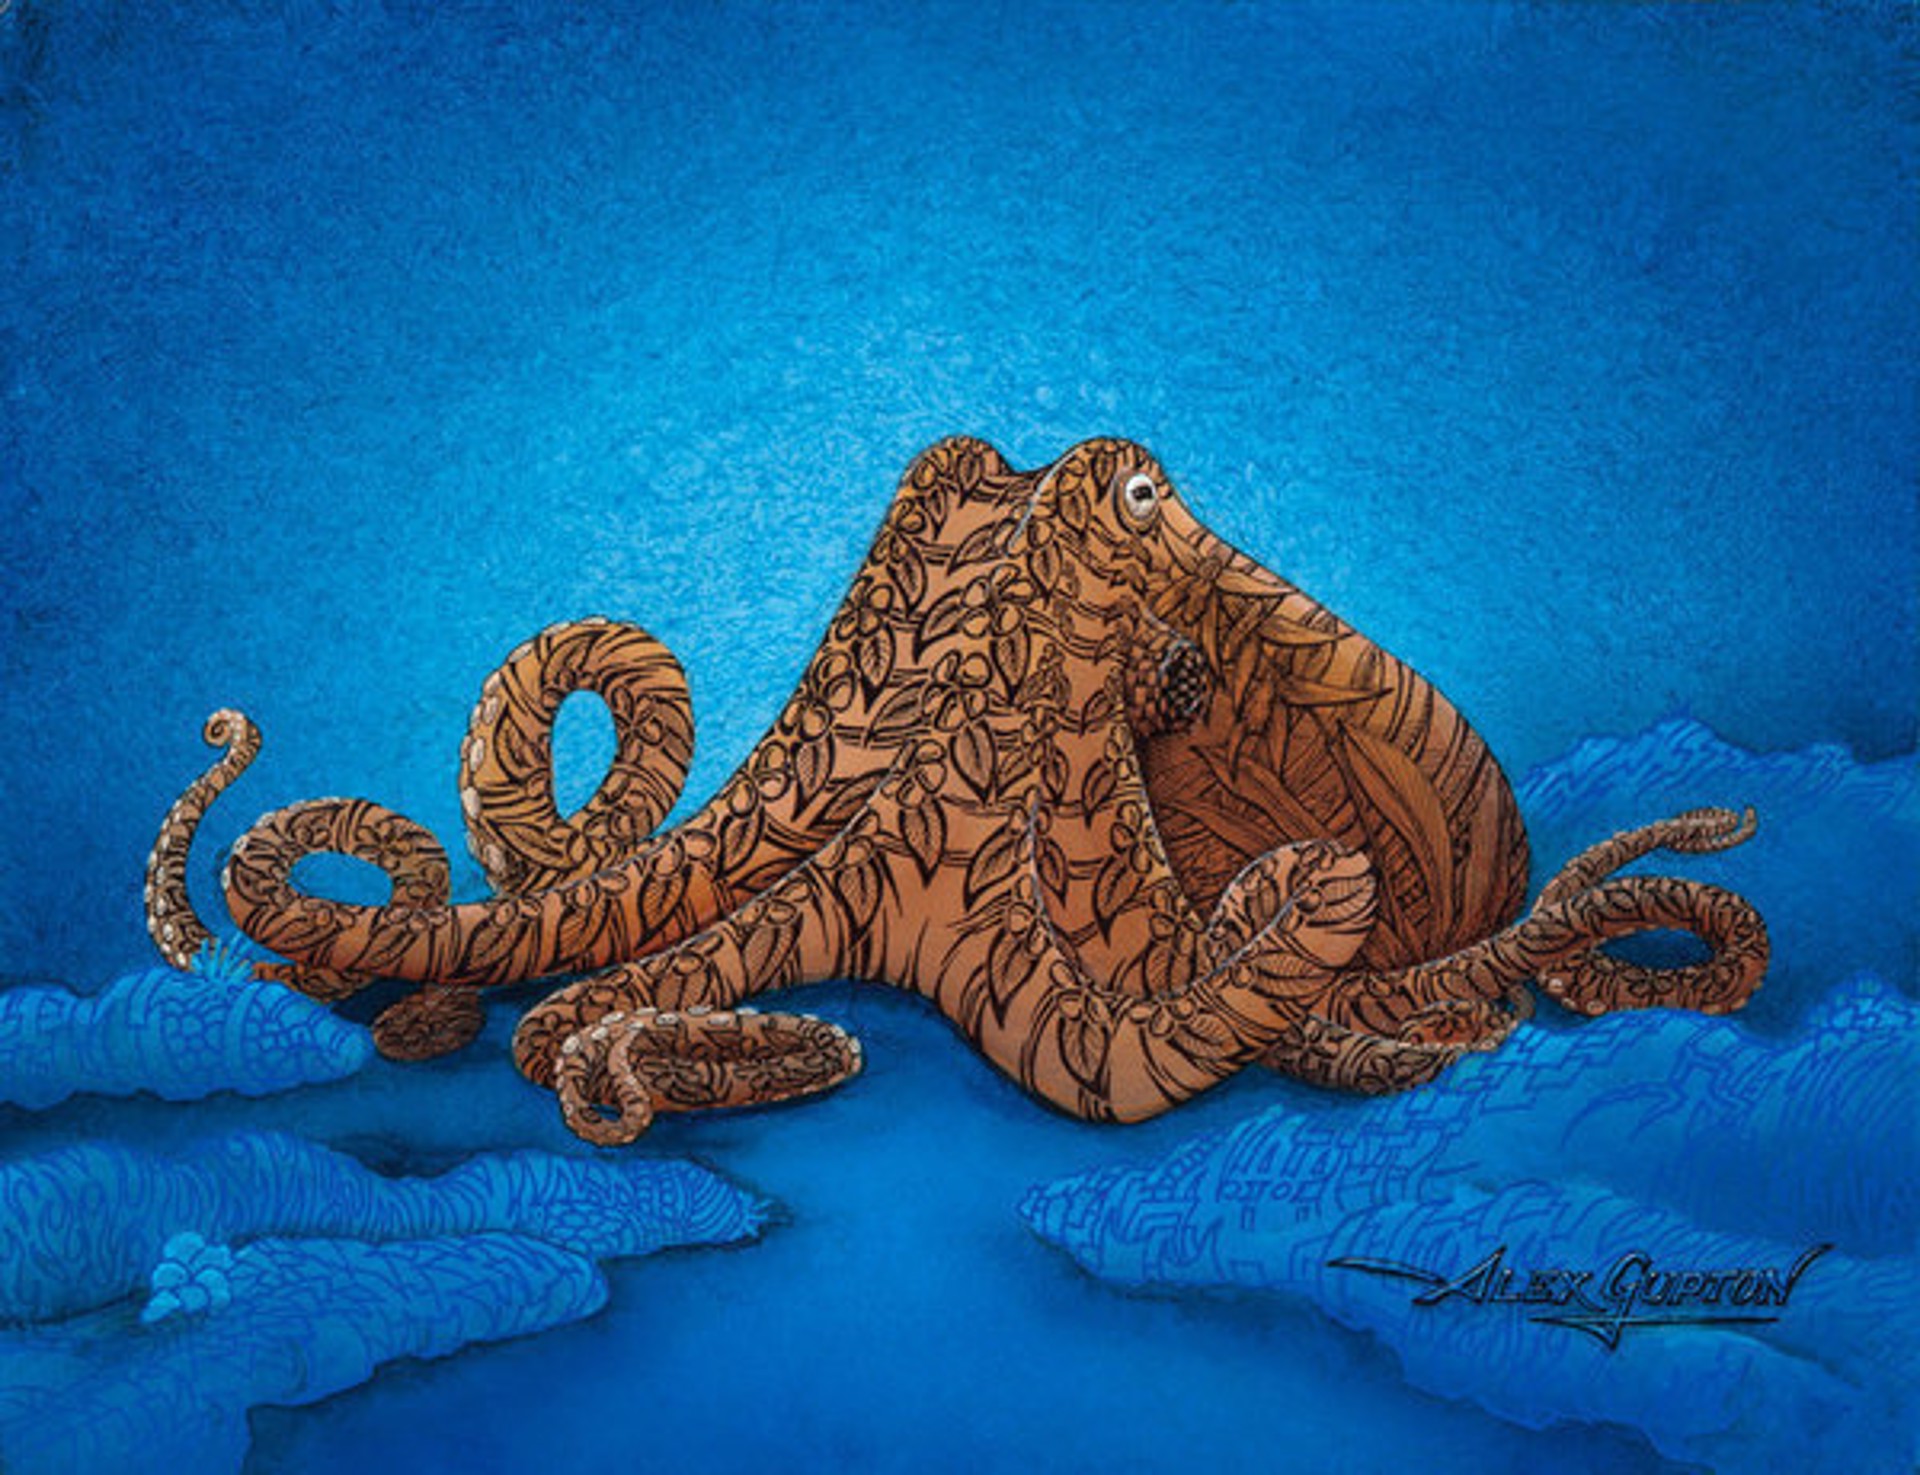 He'e (Octopus) by Alex Gupton